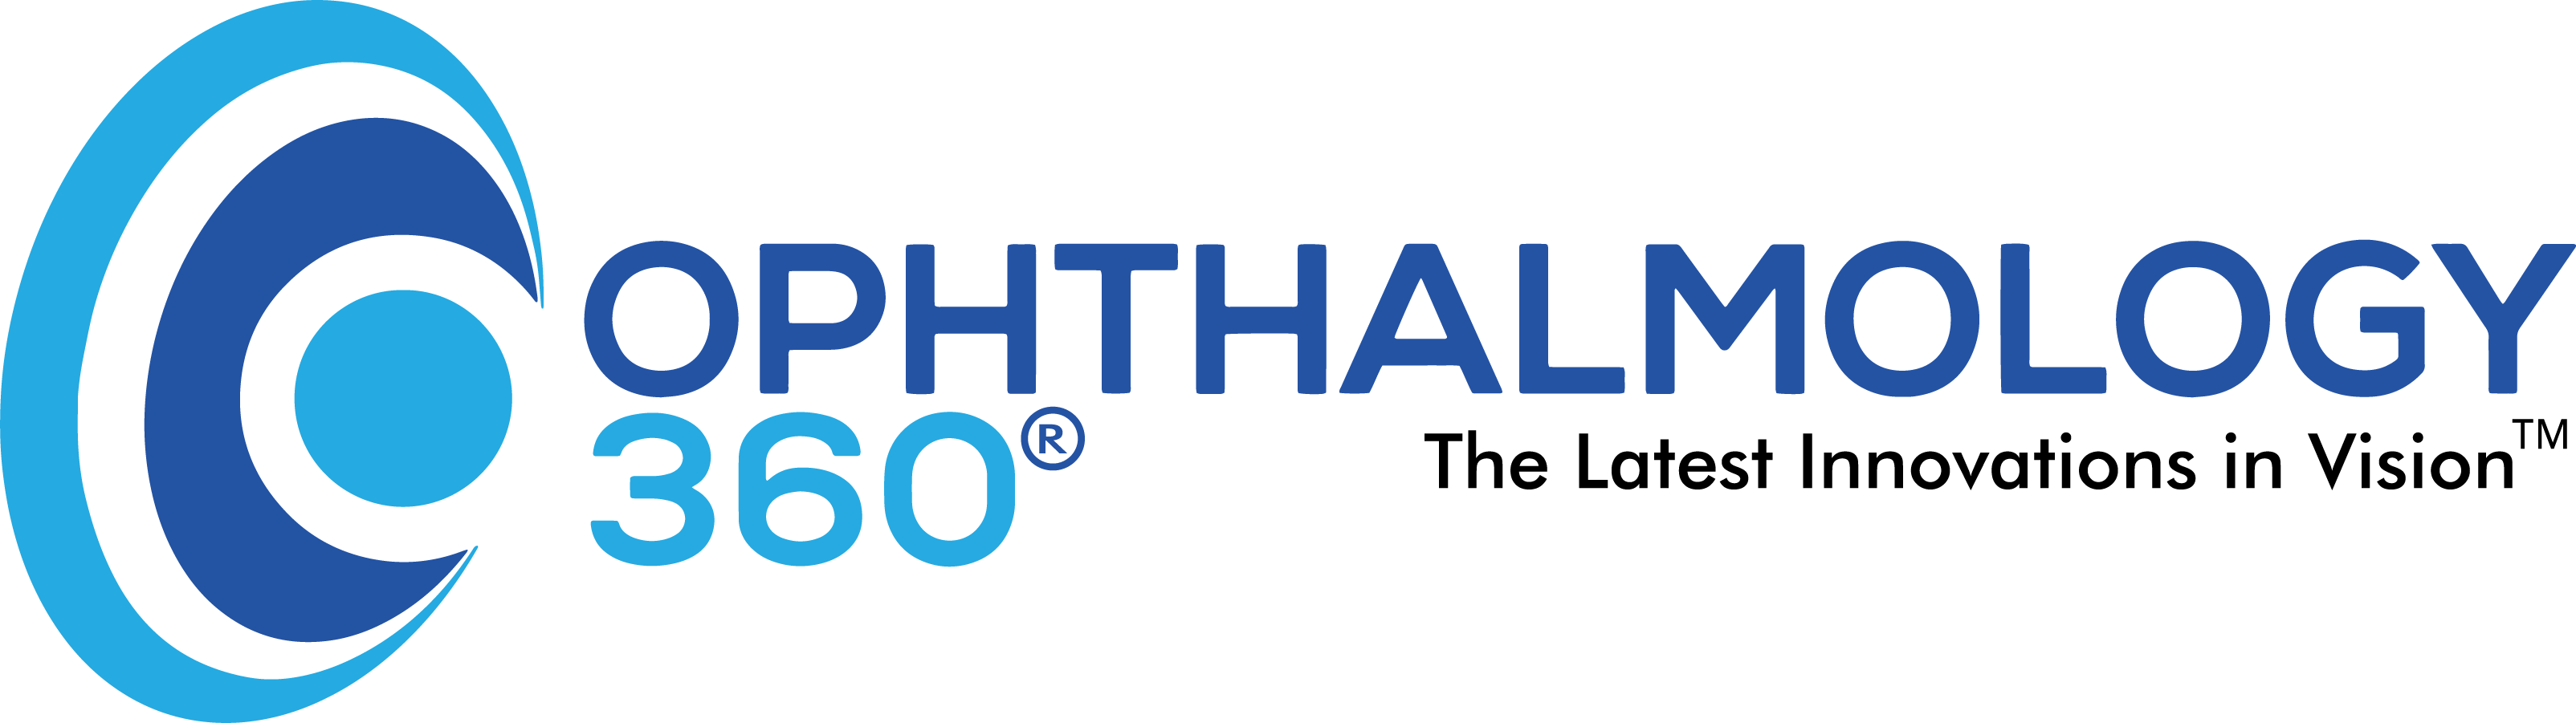 Ophthalmology 360 Logo